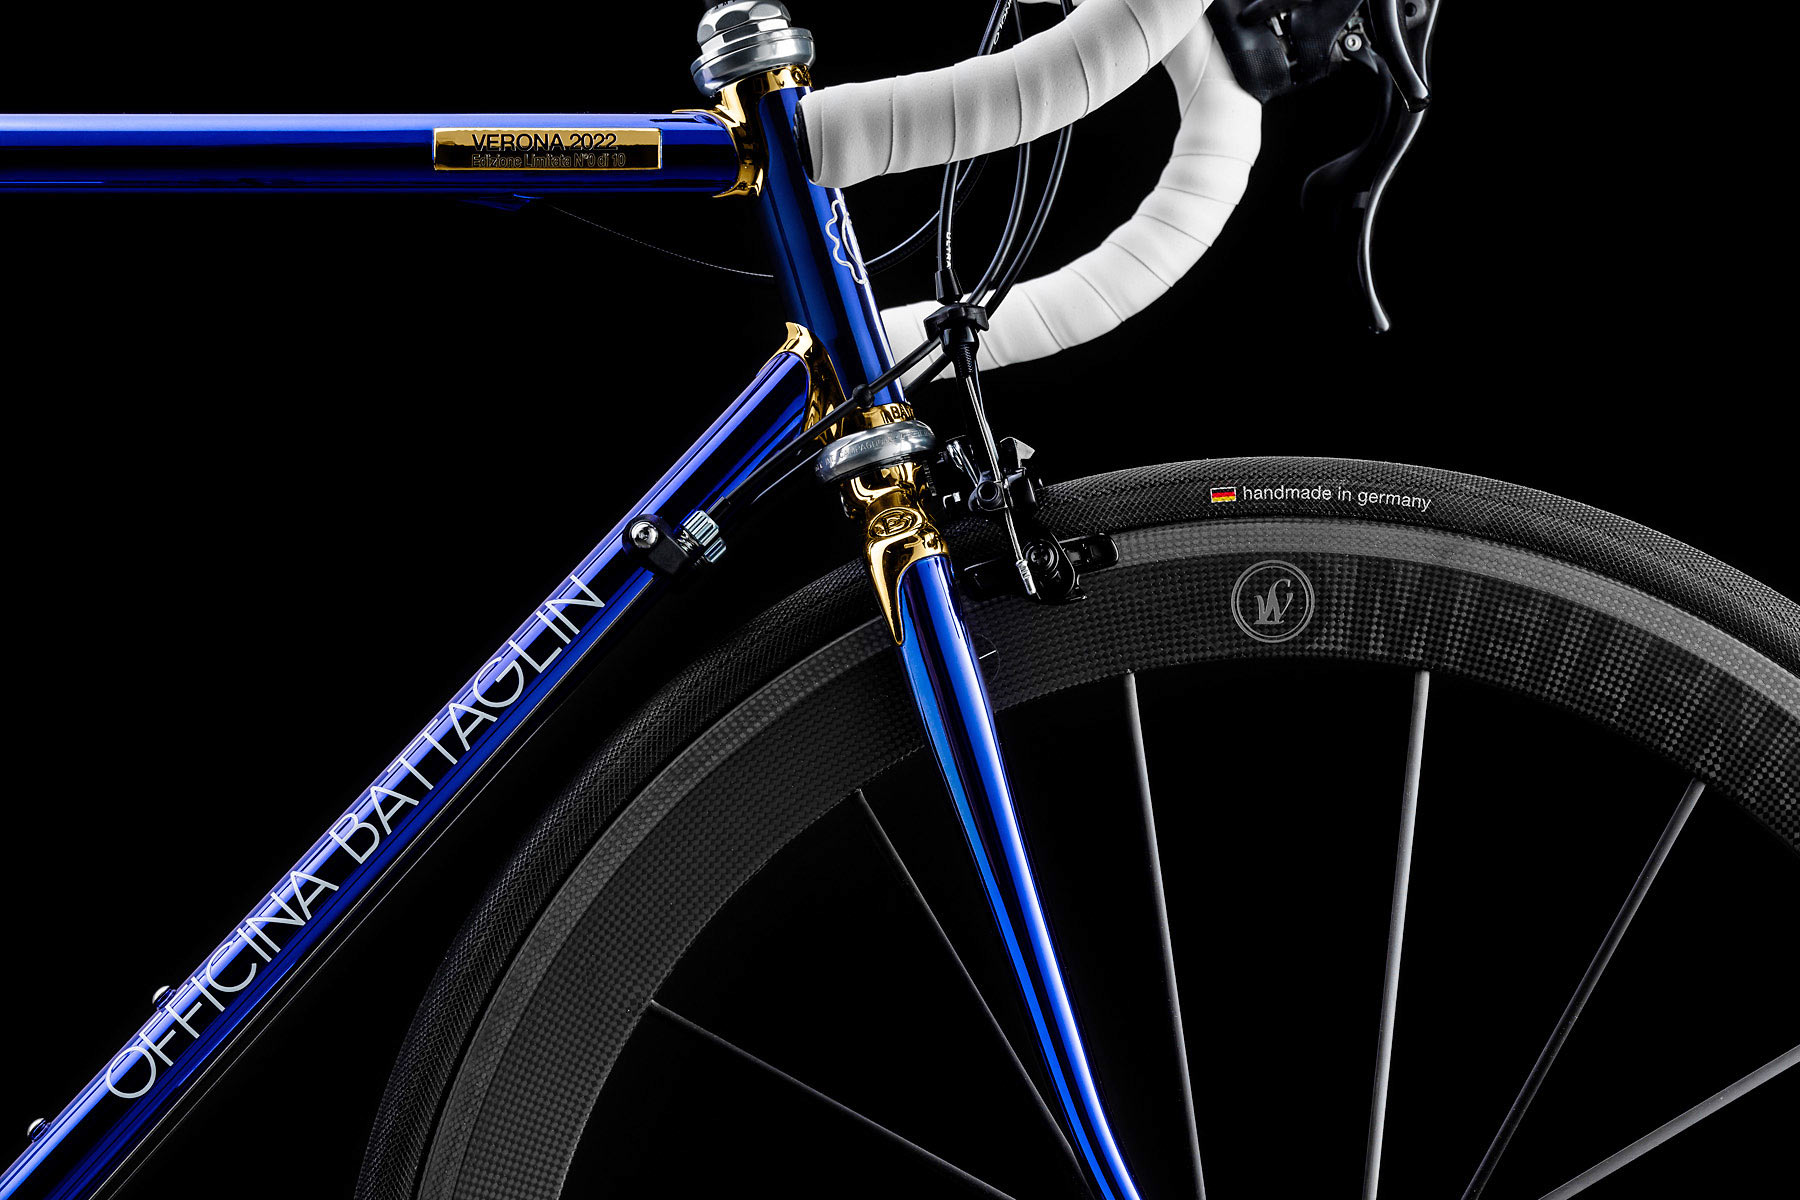 Battaglin Verona 2022 limited edition gold-plated lugged steel road bike, teaser